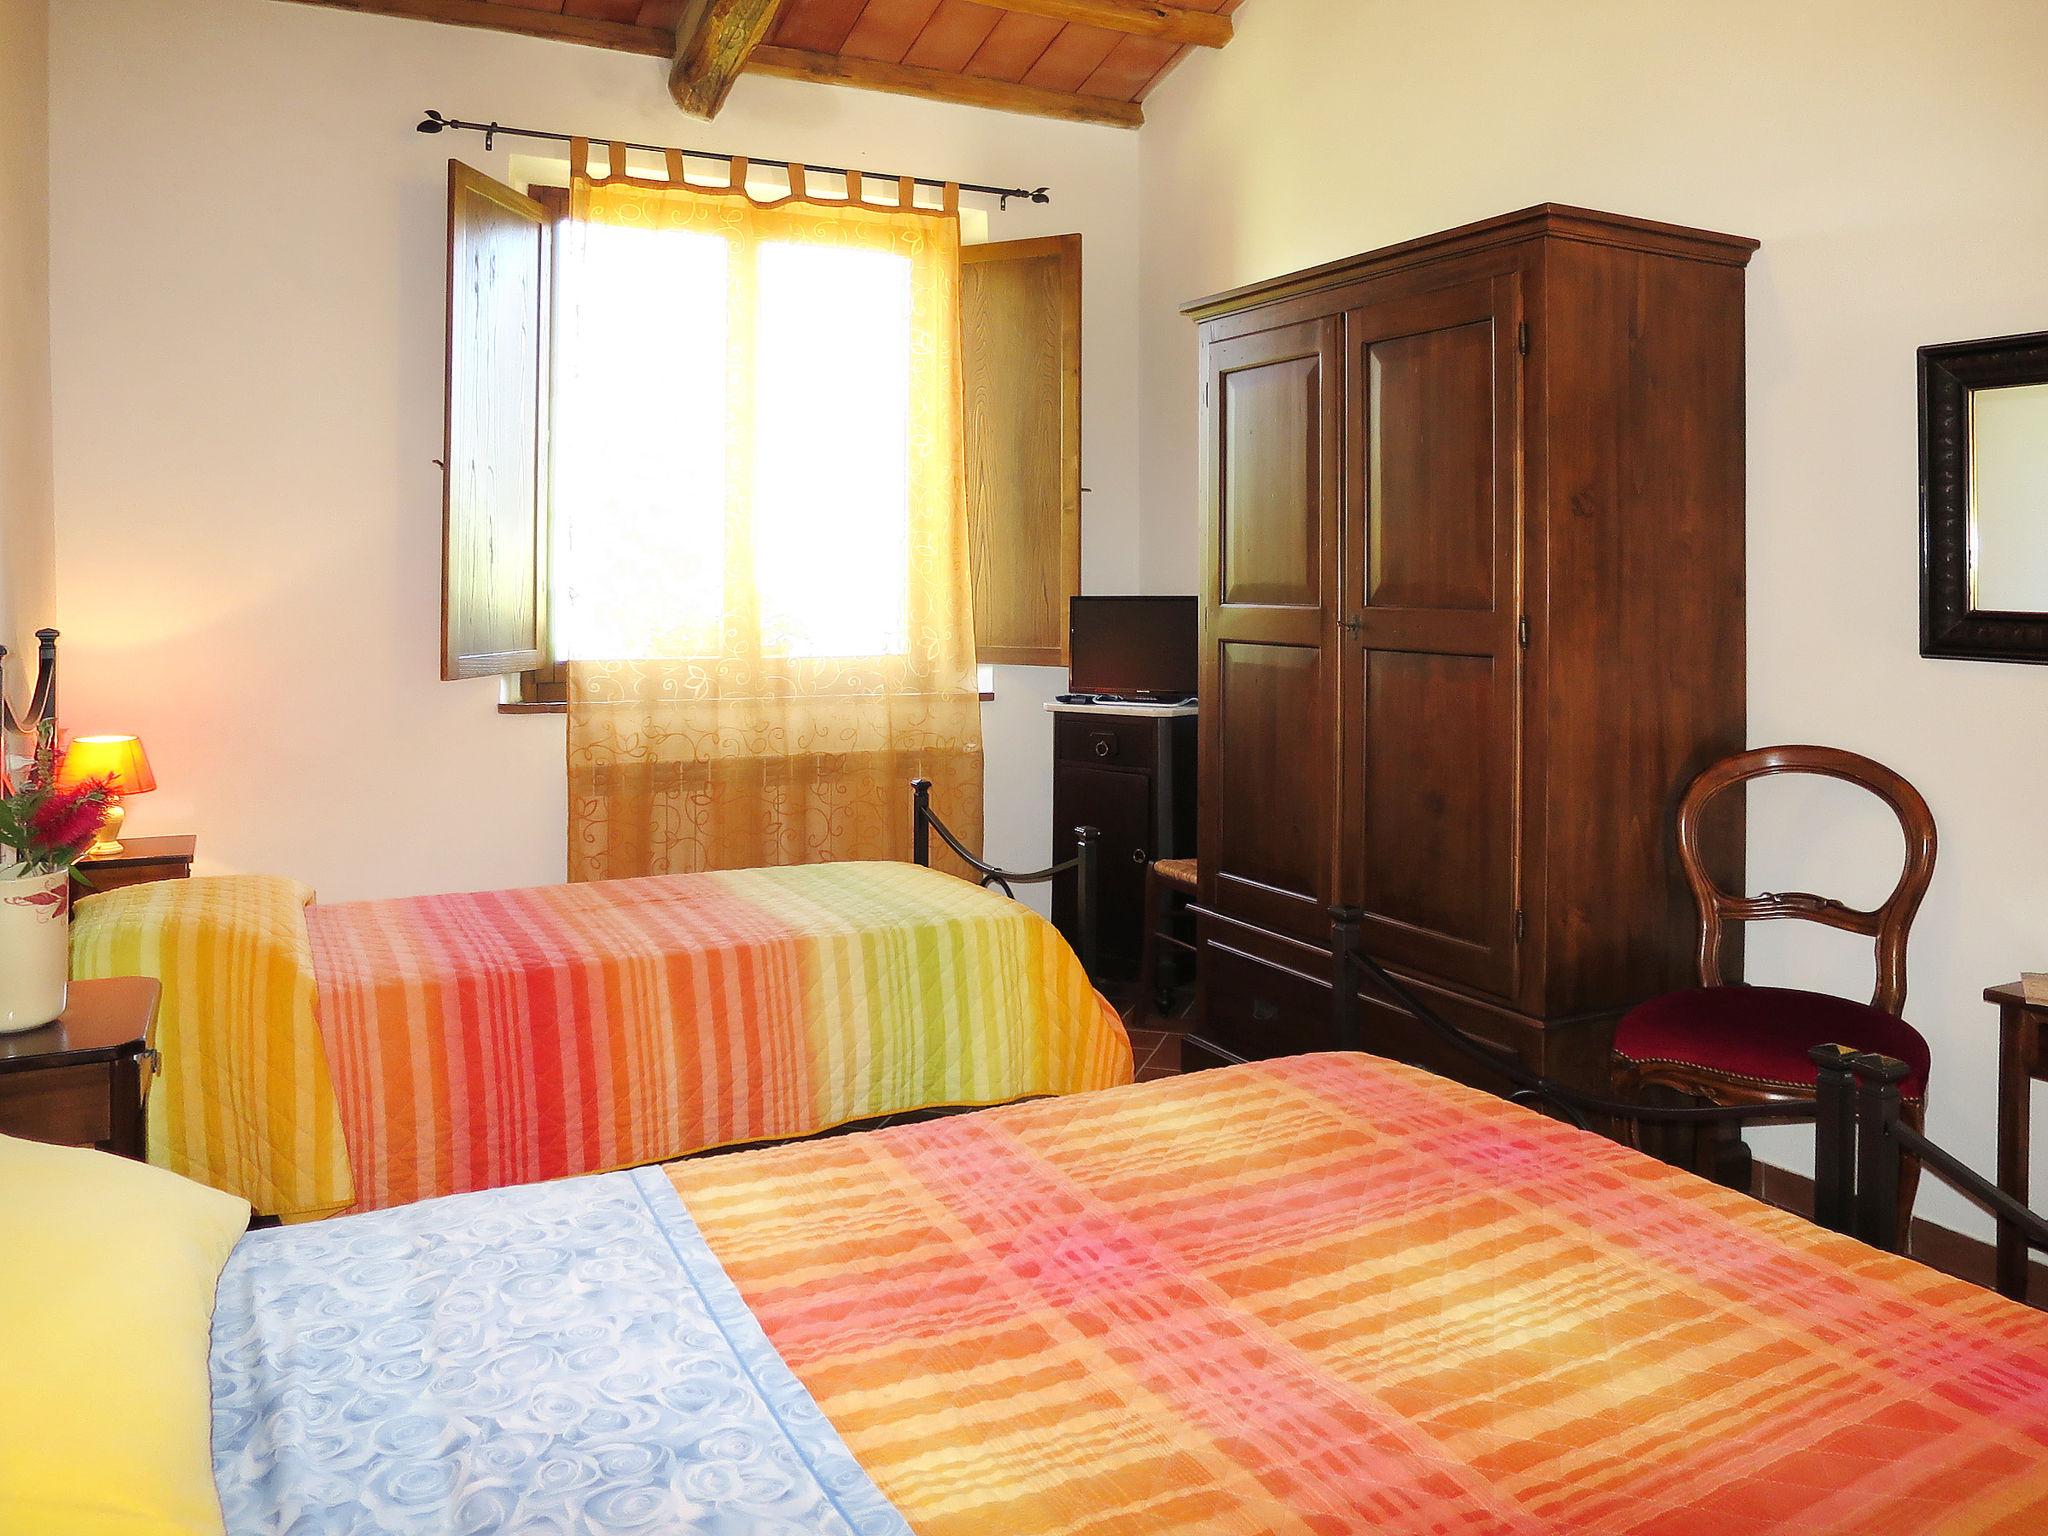 Foto 23 - Haus mit 3 Schlafzimmern in Castelnuovo di Val di Cecina mit privater pool und garten